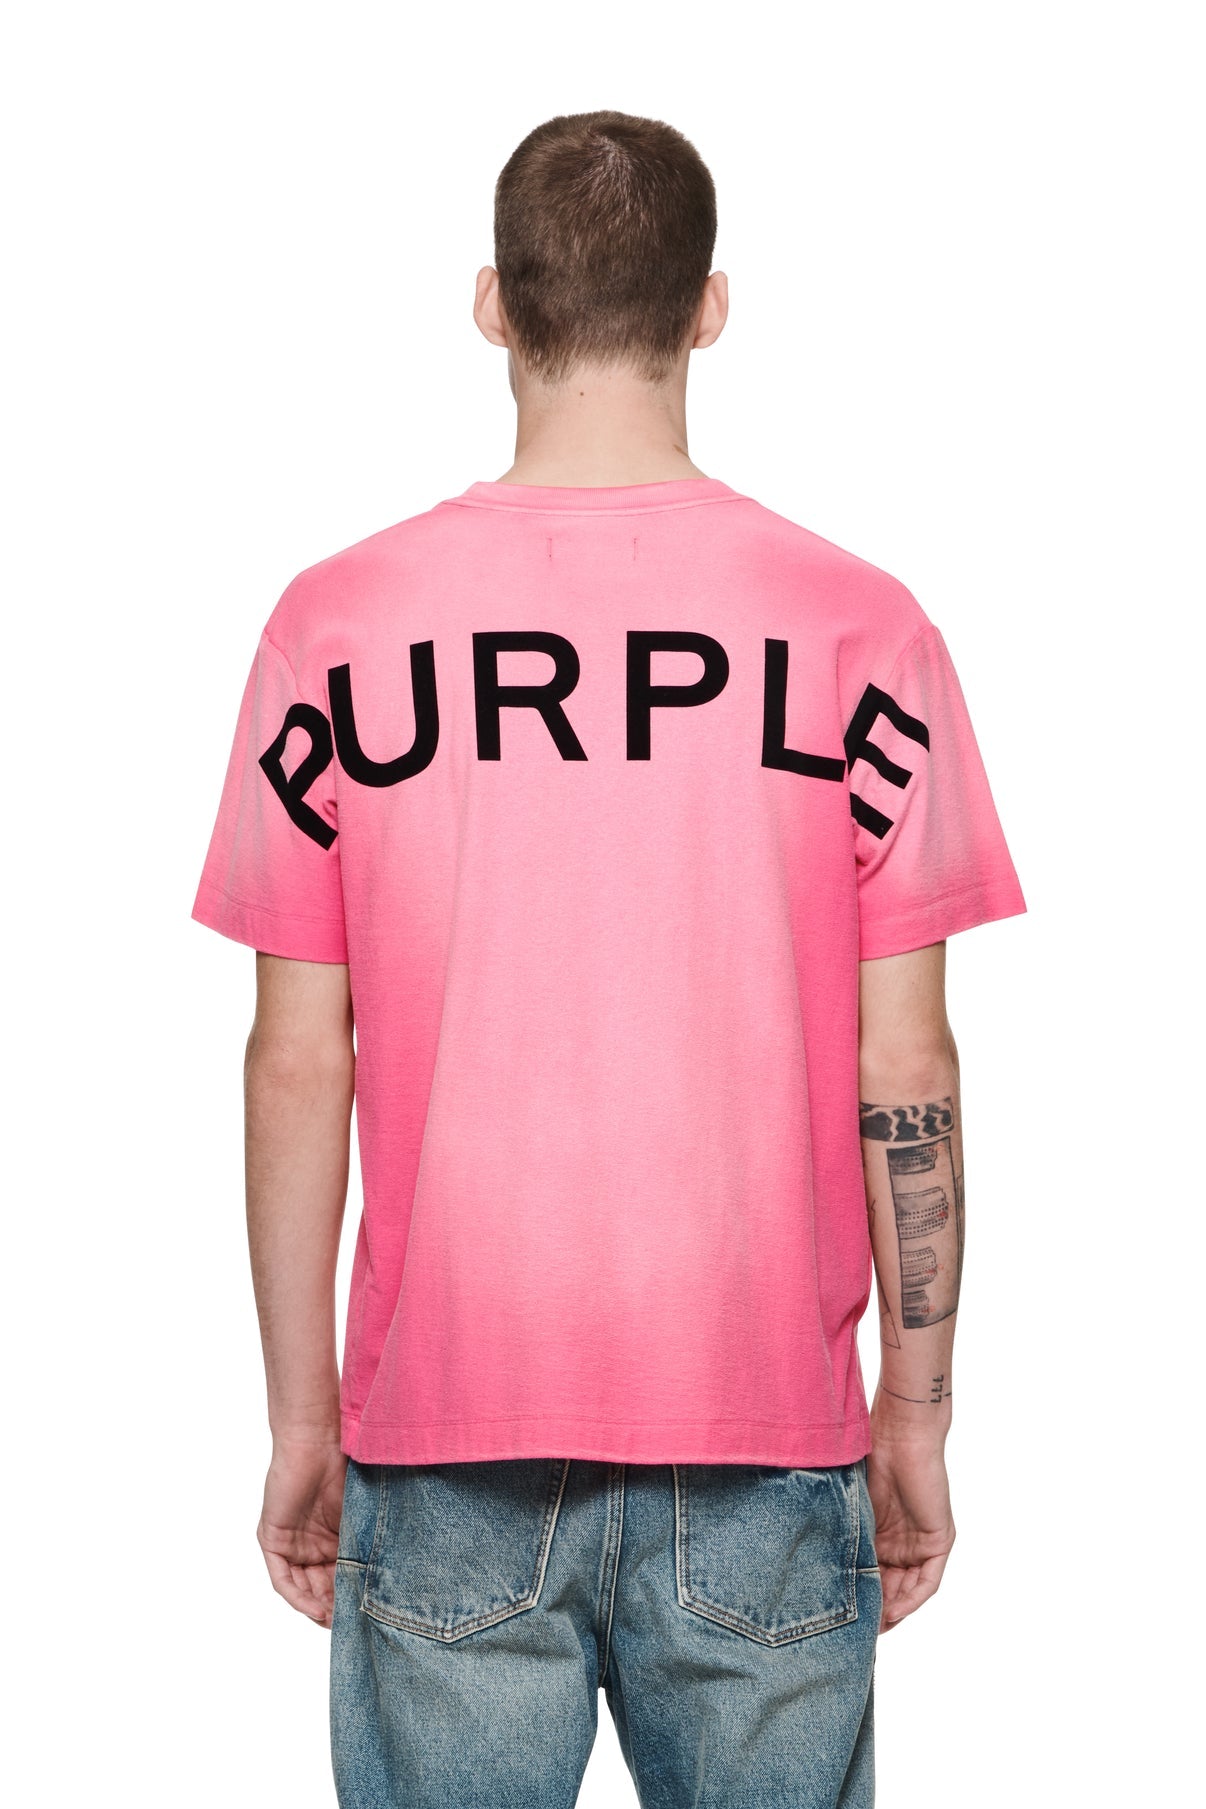 PURPLE BRAND Wordmark T-Shirt